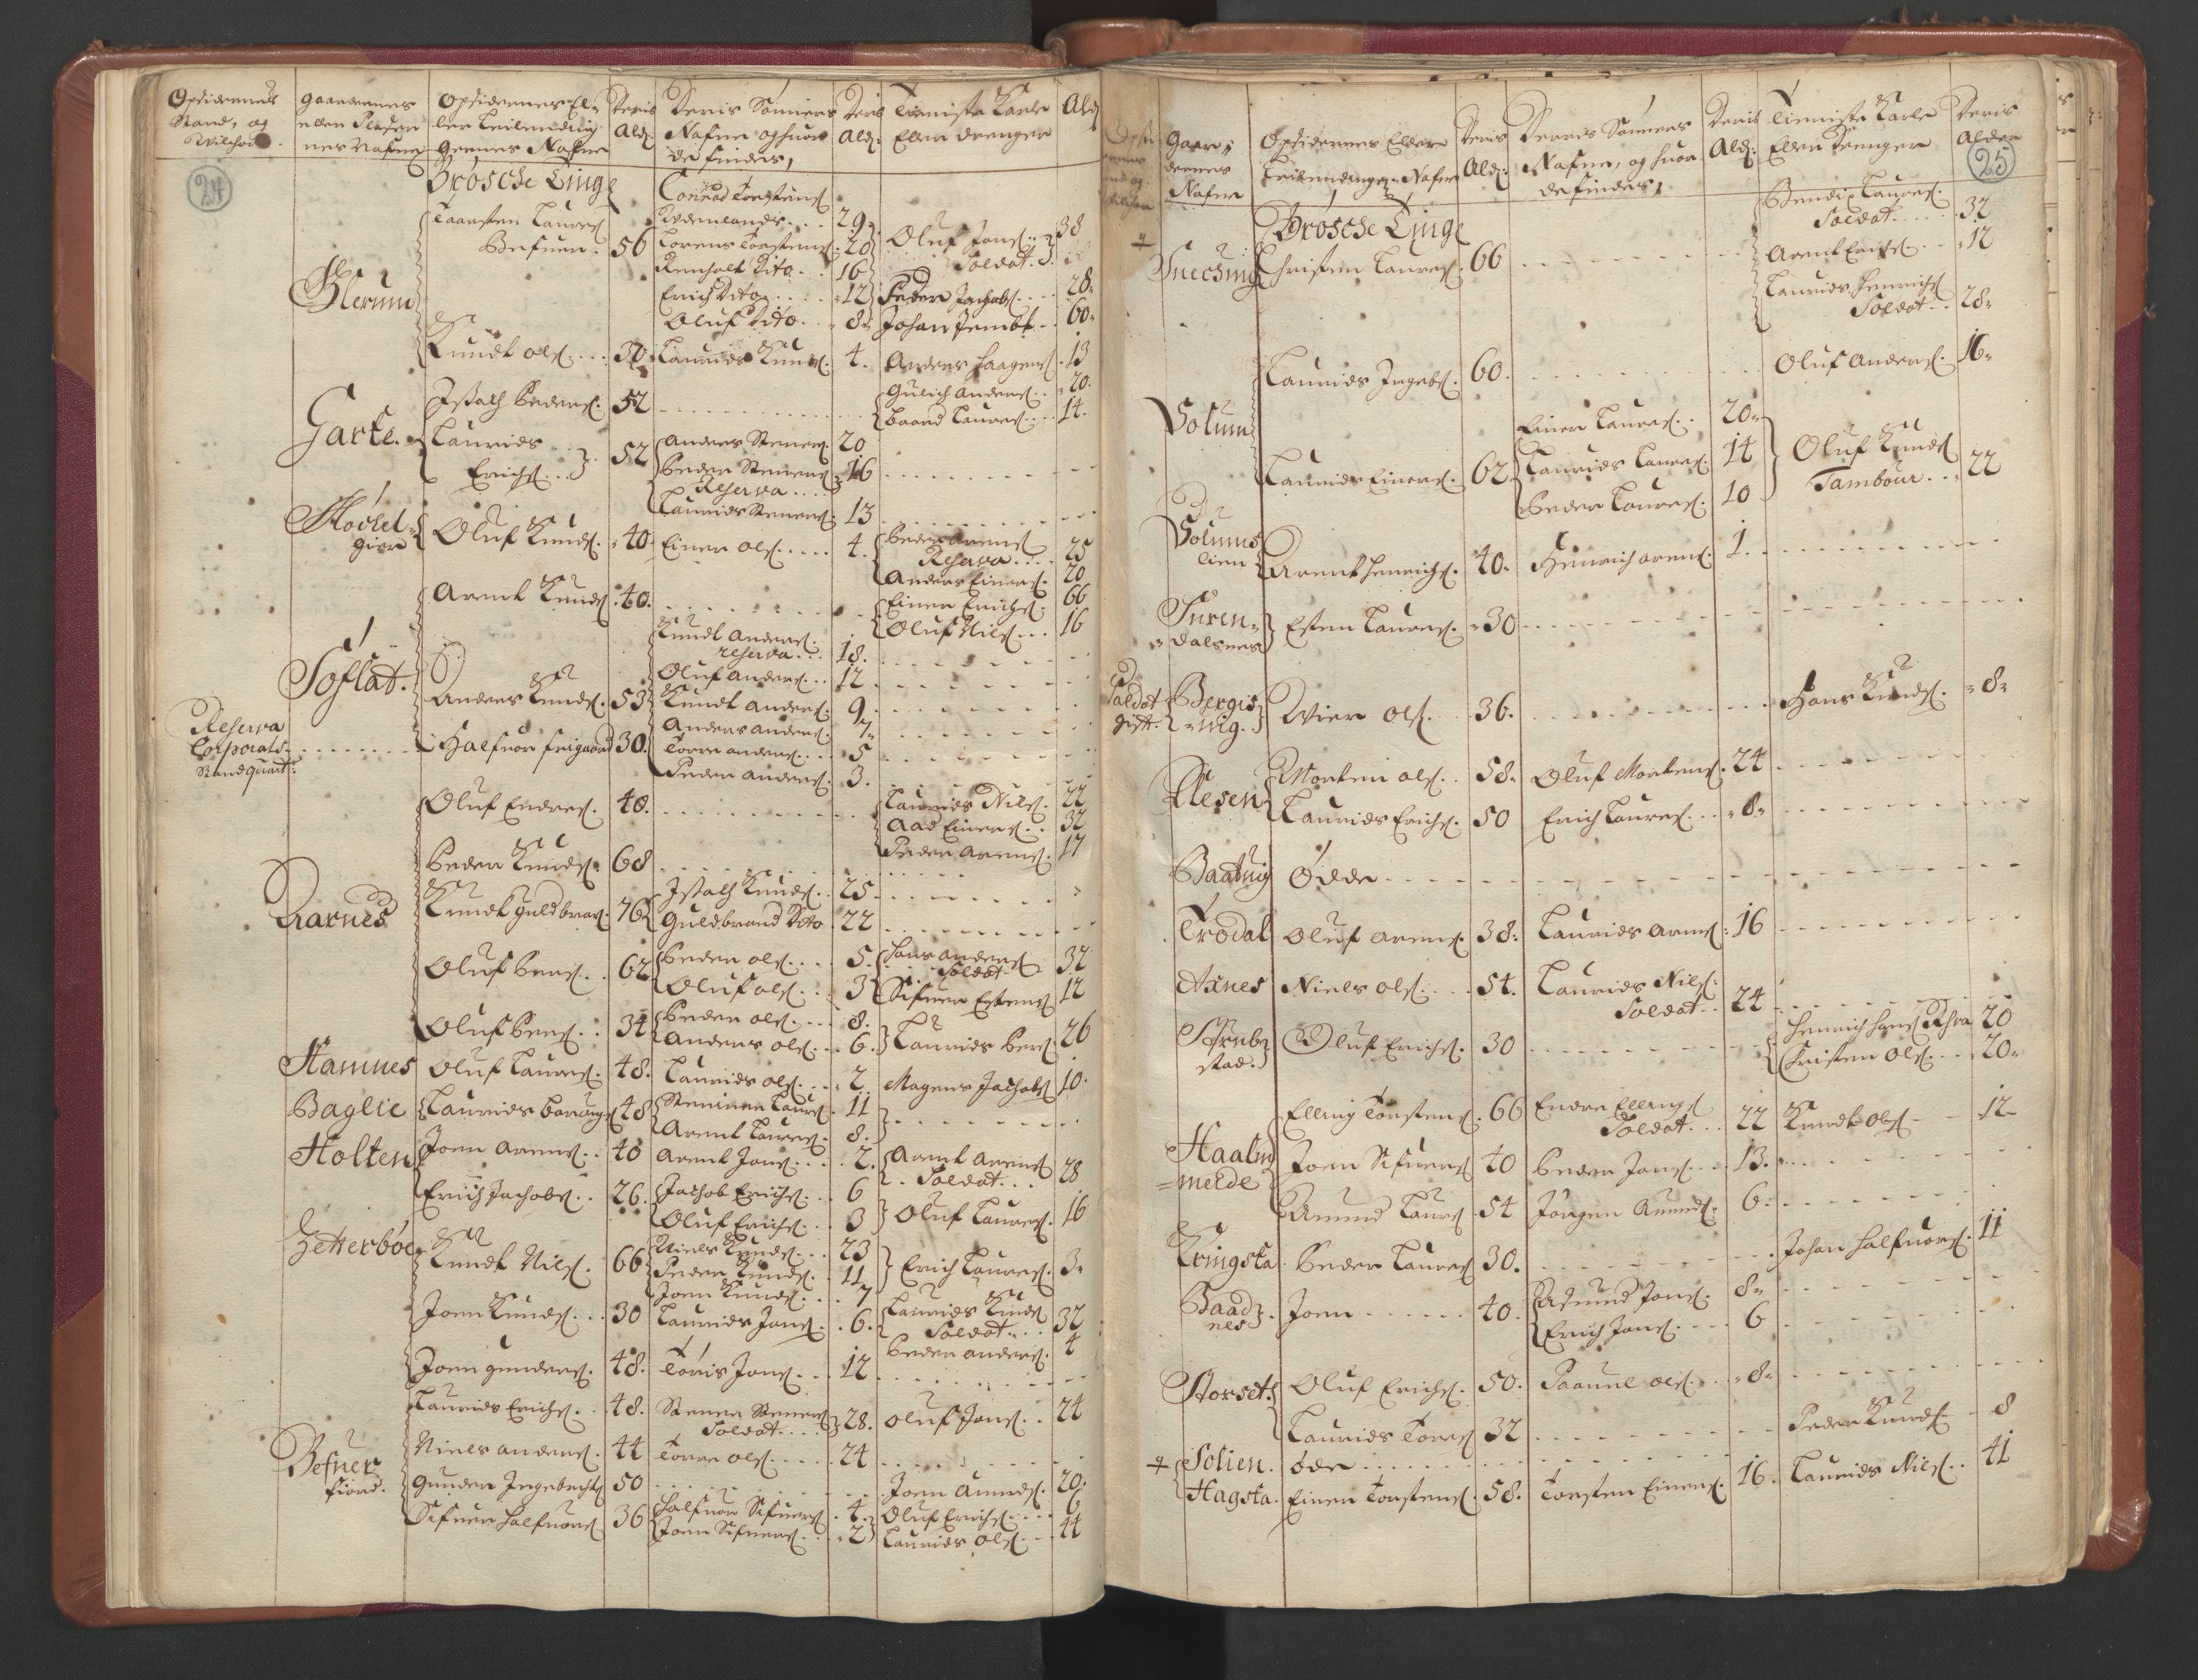 RA, Manntallet 1701, nr. 11: Nordmøre fogderi og Romsdal fogderi, 1701, s. 24-25